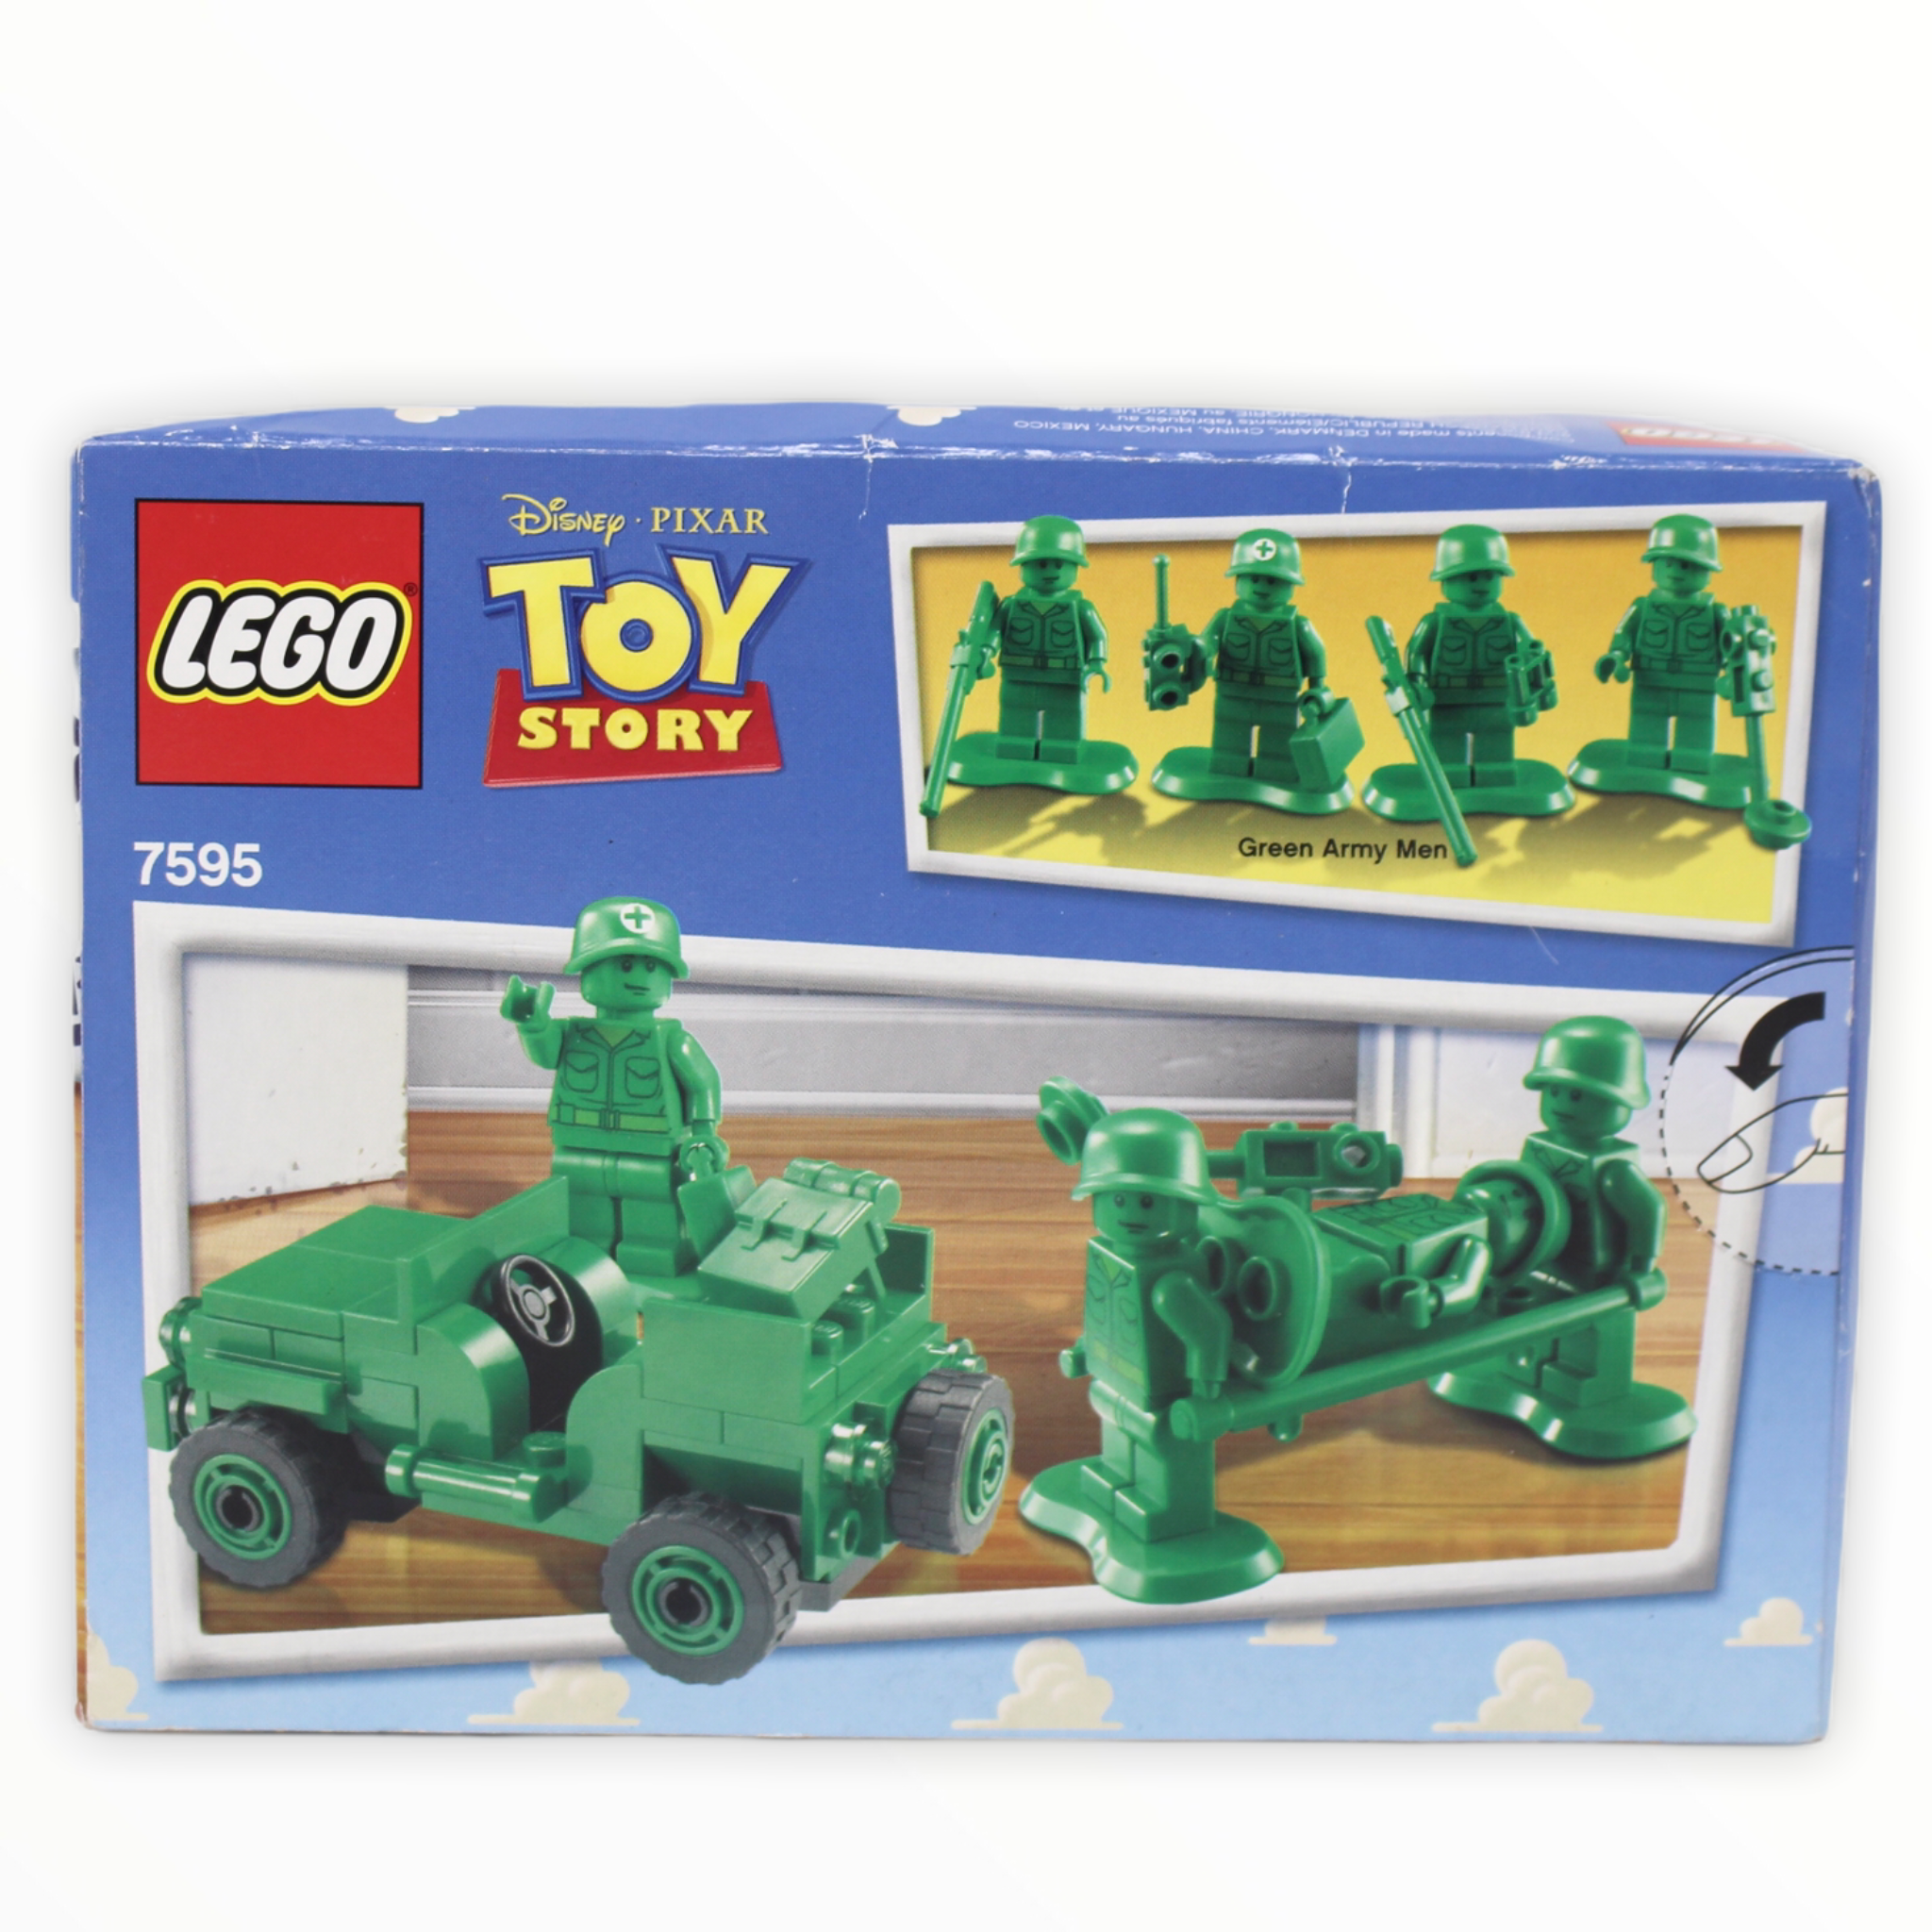 Lego Toy Story 7595 - 4x Green Army Minifigures w Accessories & Stretcher -  New